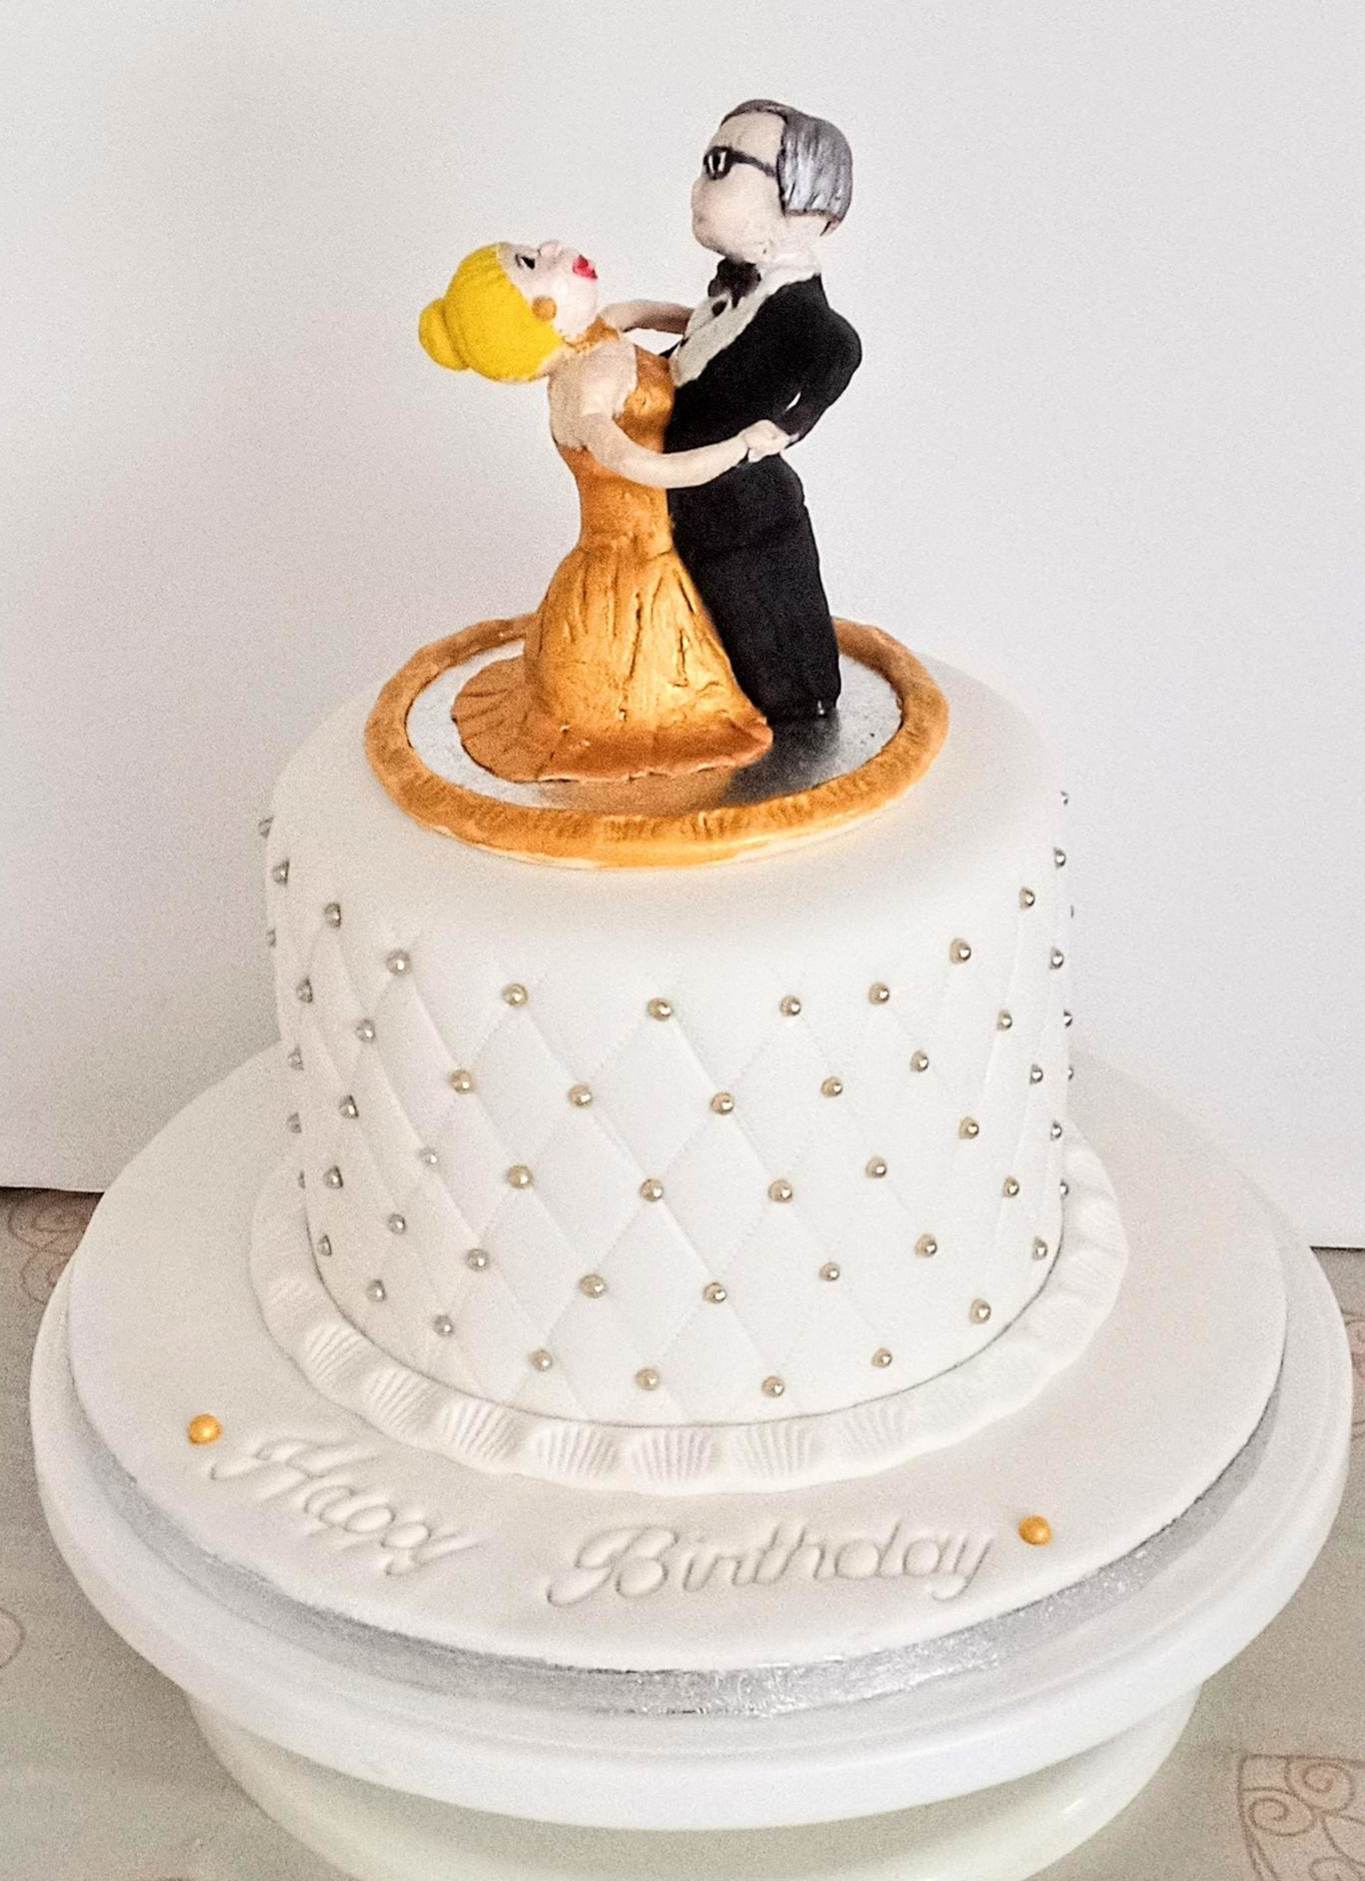 A Ballroom dancing couple birthday cake